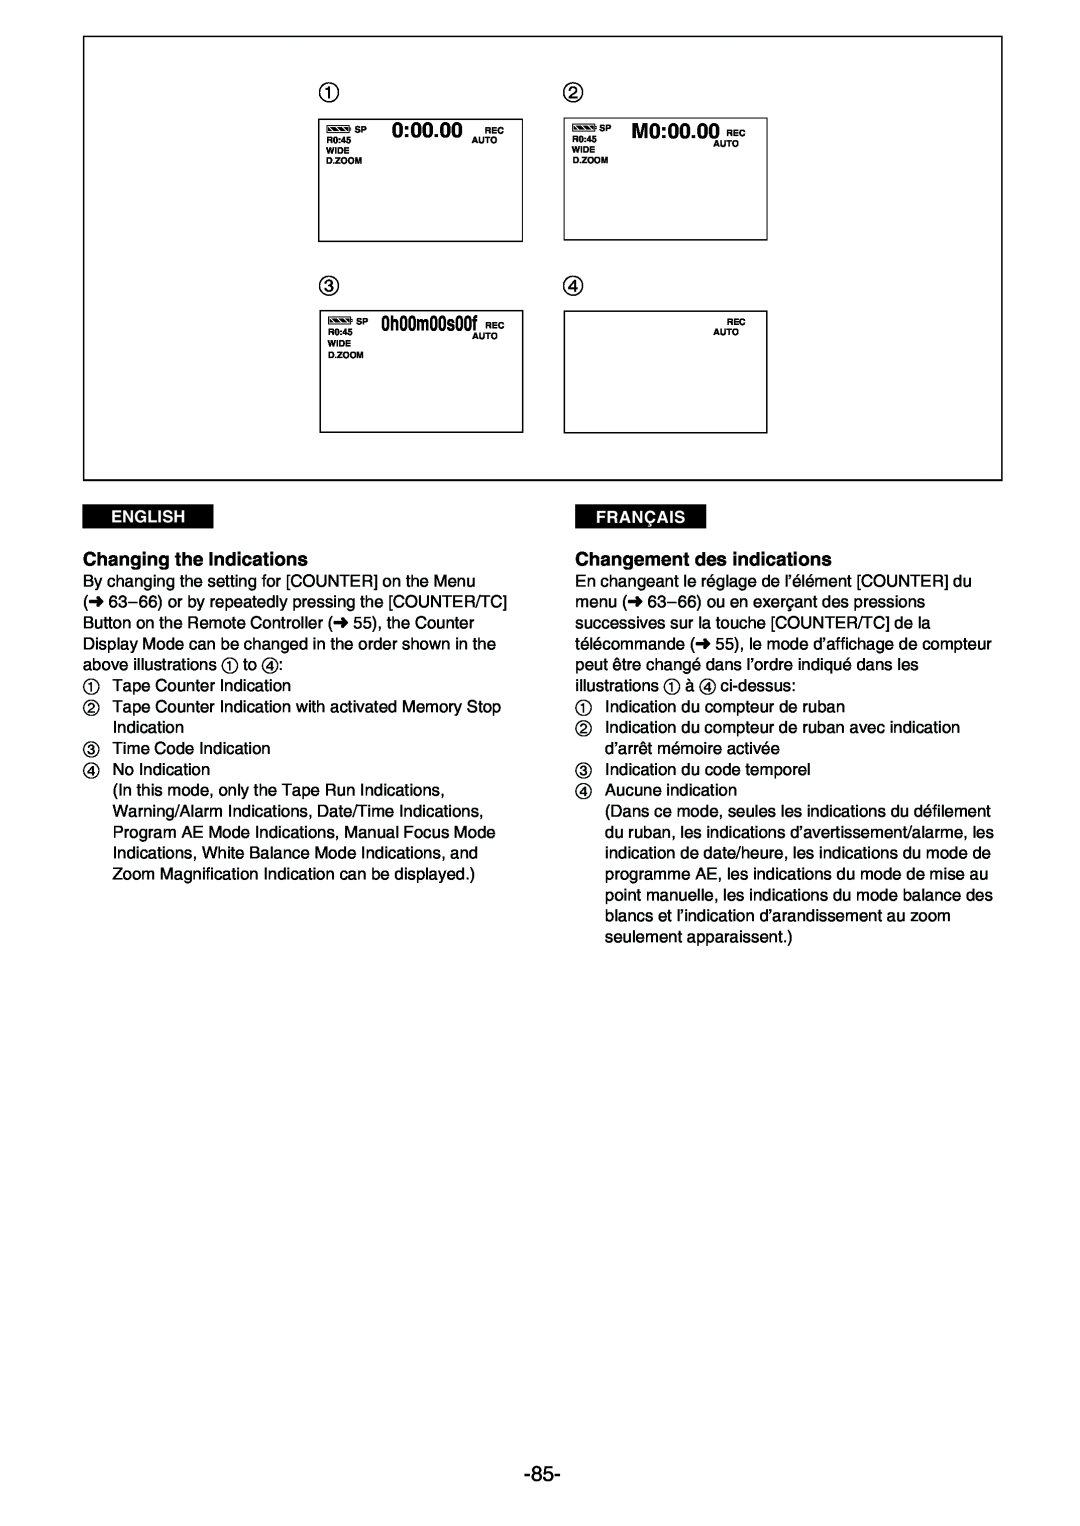 Panasonic AG- DVC 15P manual M000.00 REC, Changing the Indications, Changement des indications, 0h00m00s00f REC, English 